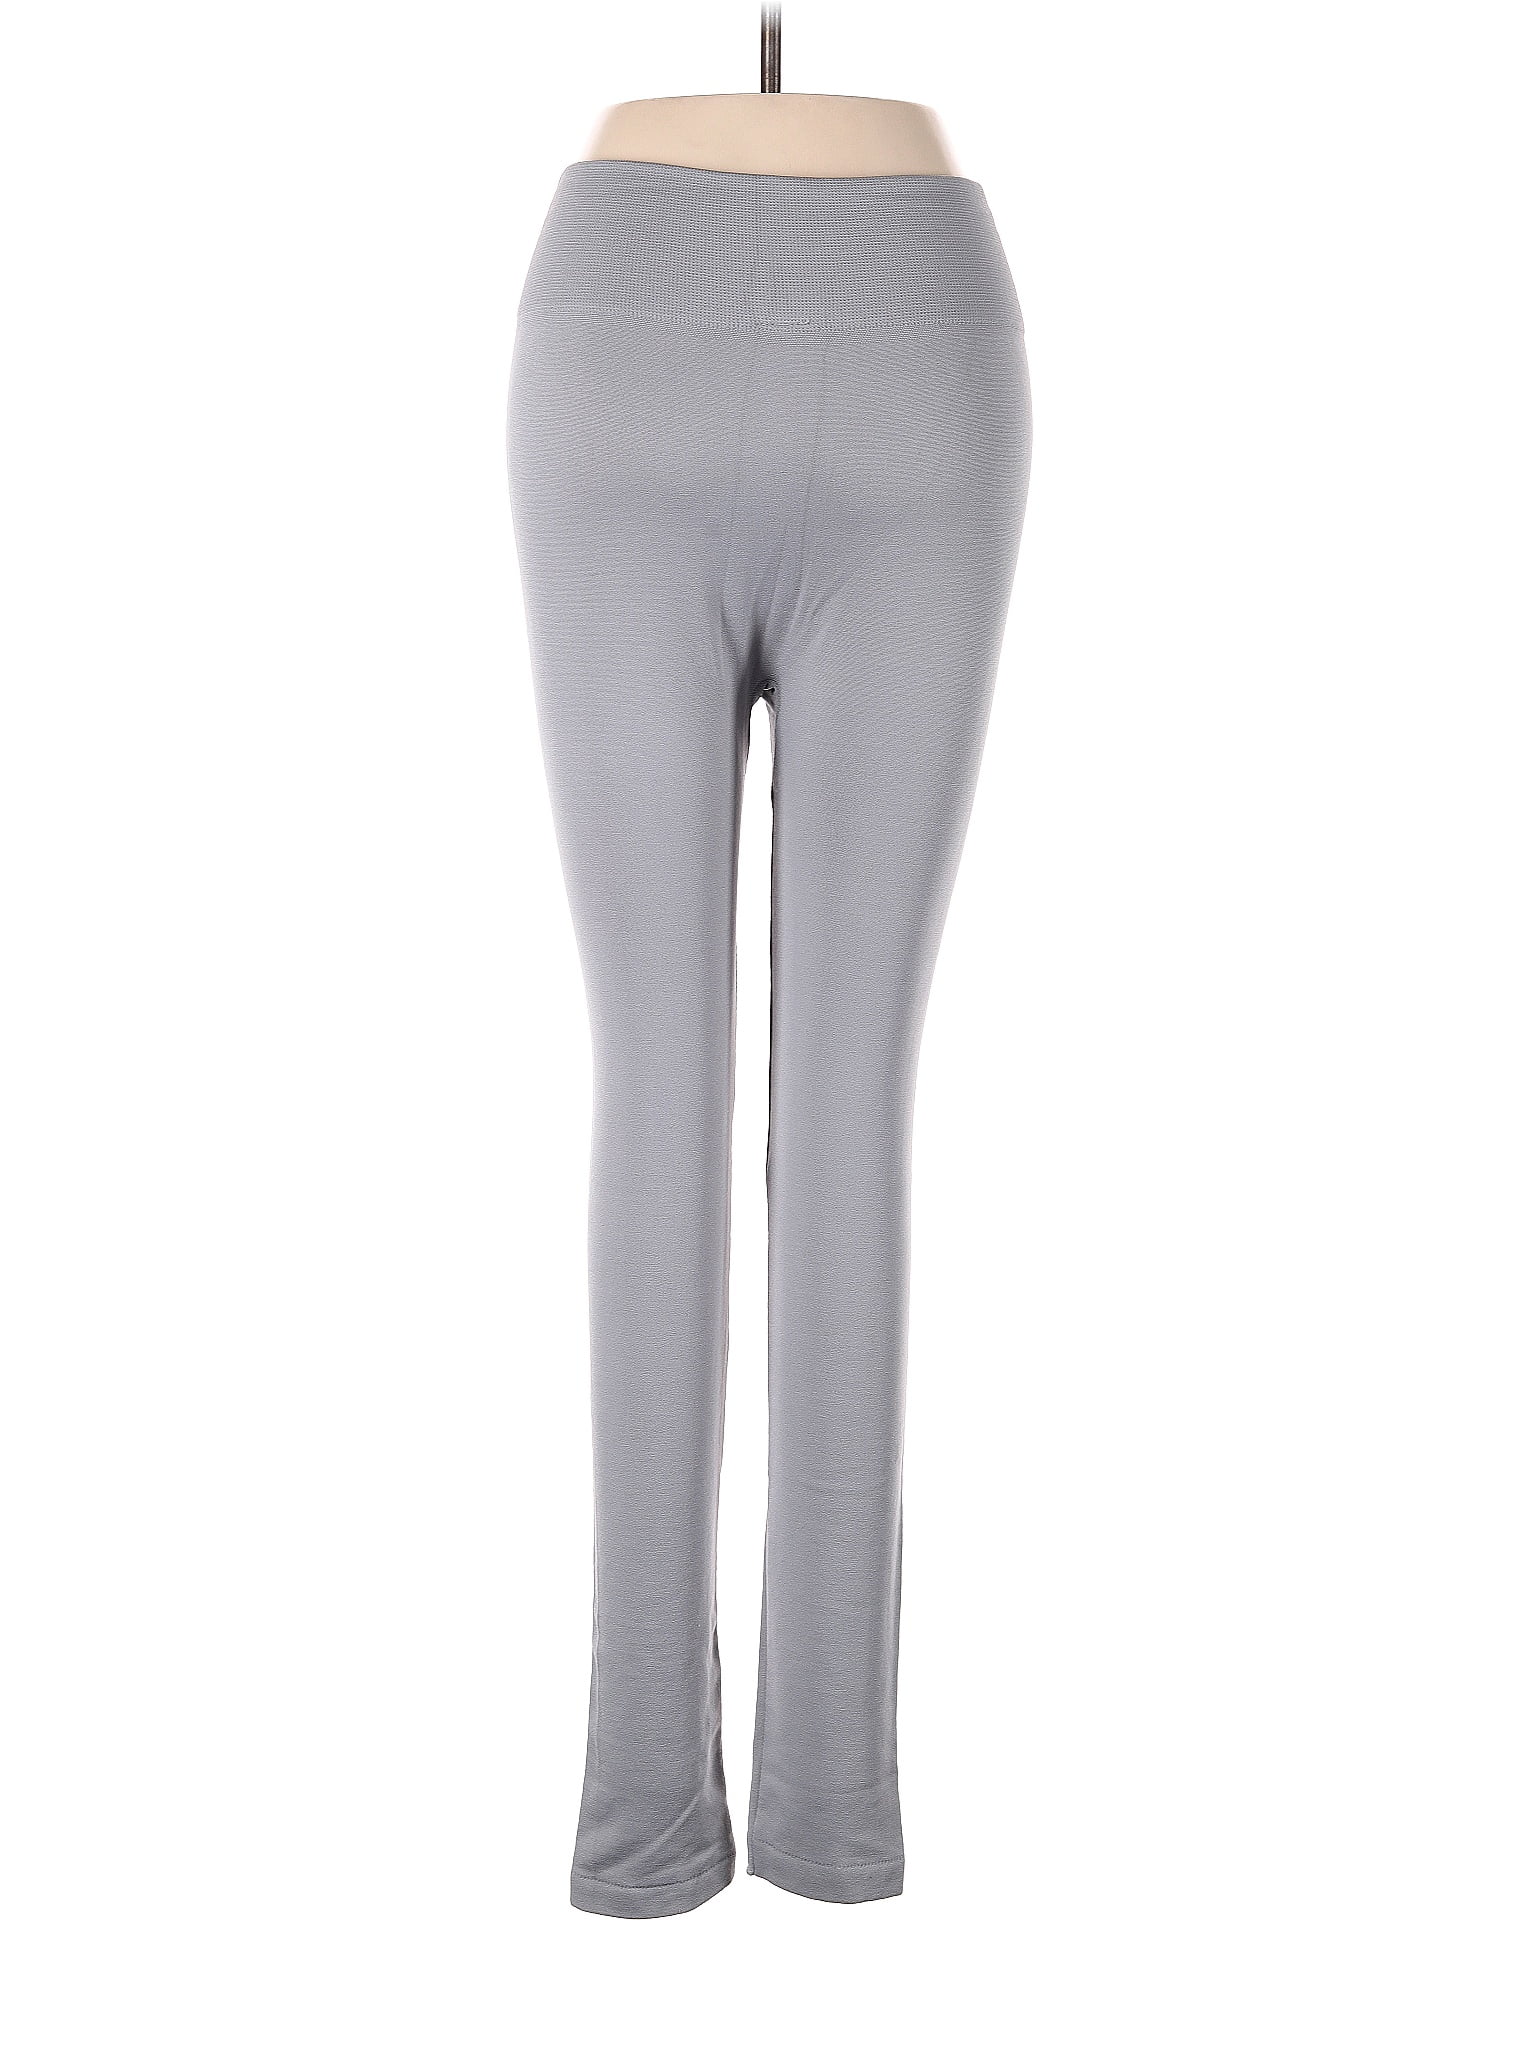 PrAna Multi Color Gray Leggings Size XL - 52% off